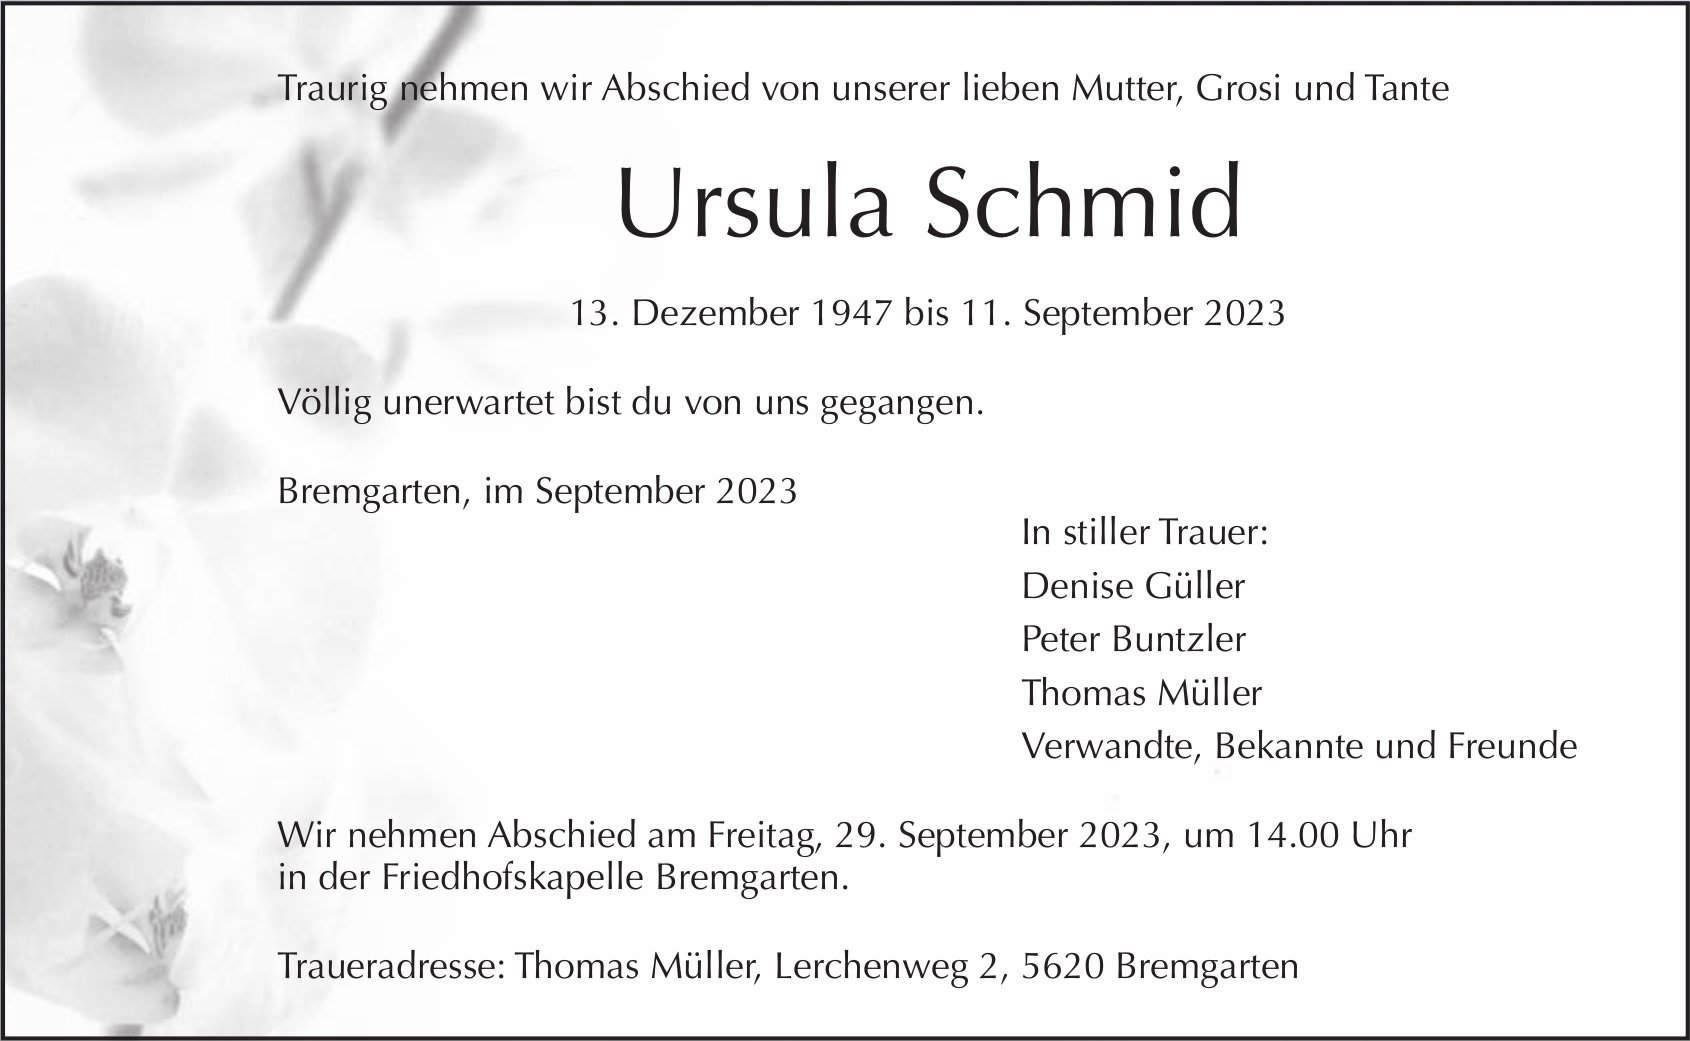 Ursula Schmid, September 2023 / TA